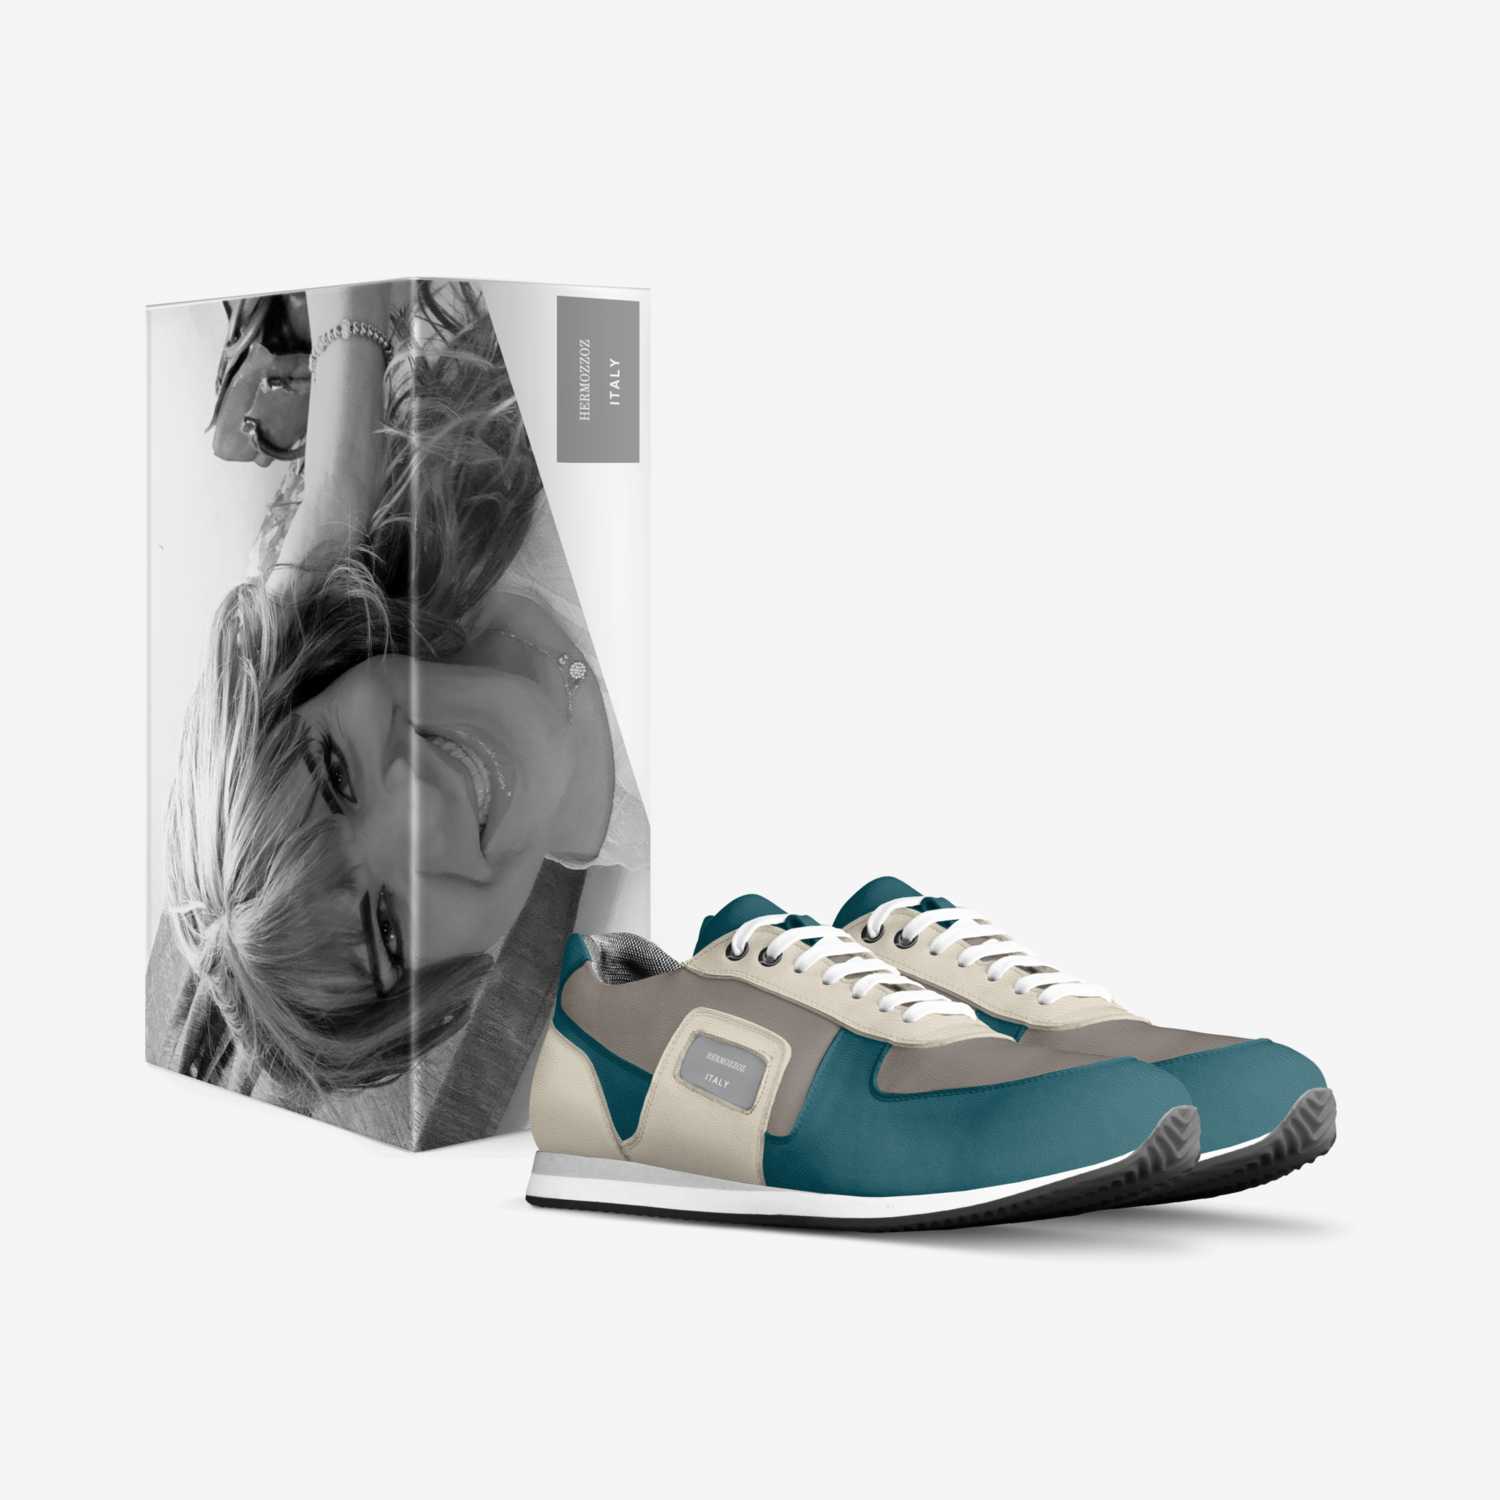 HERMOZZOZ By LOLA custom made in Italy shoes by Lola Alcantar | Box view